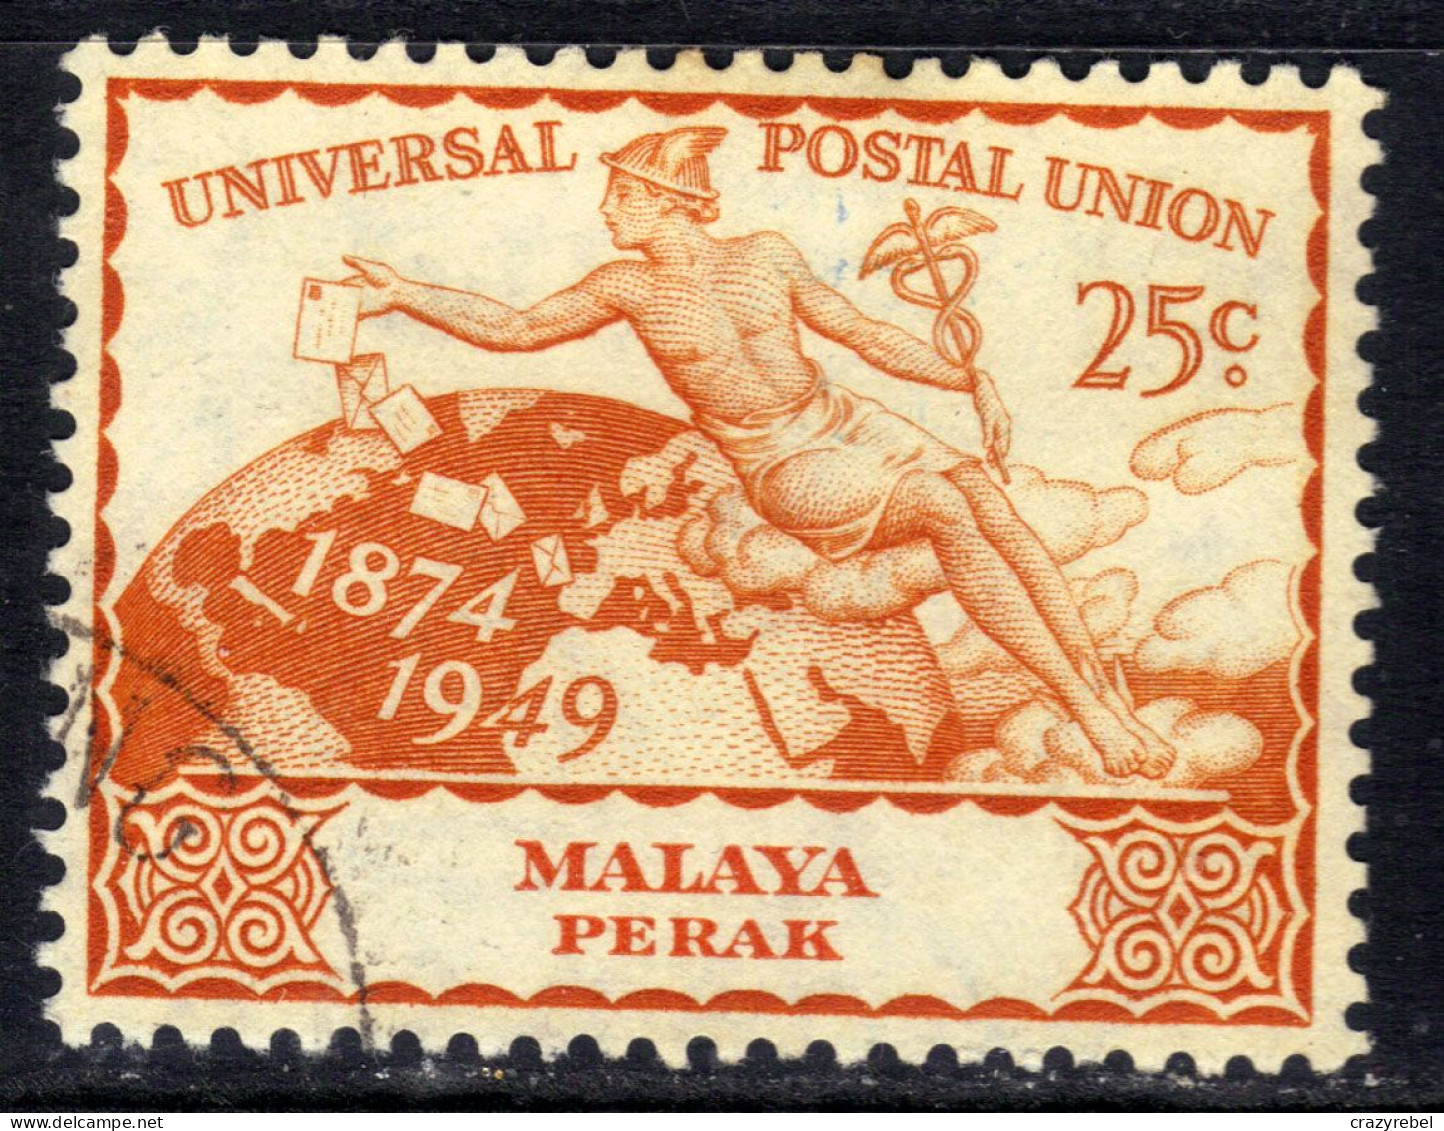 Perak Malaya 1949 KGV1 25ct UPU Postal Union Used SG 126 ( F1442 ) - Perak